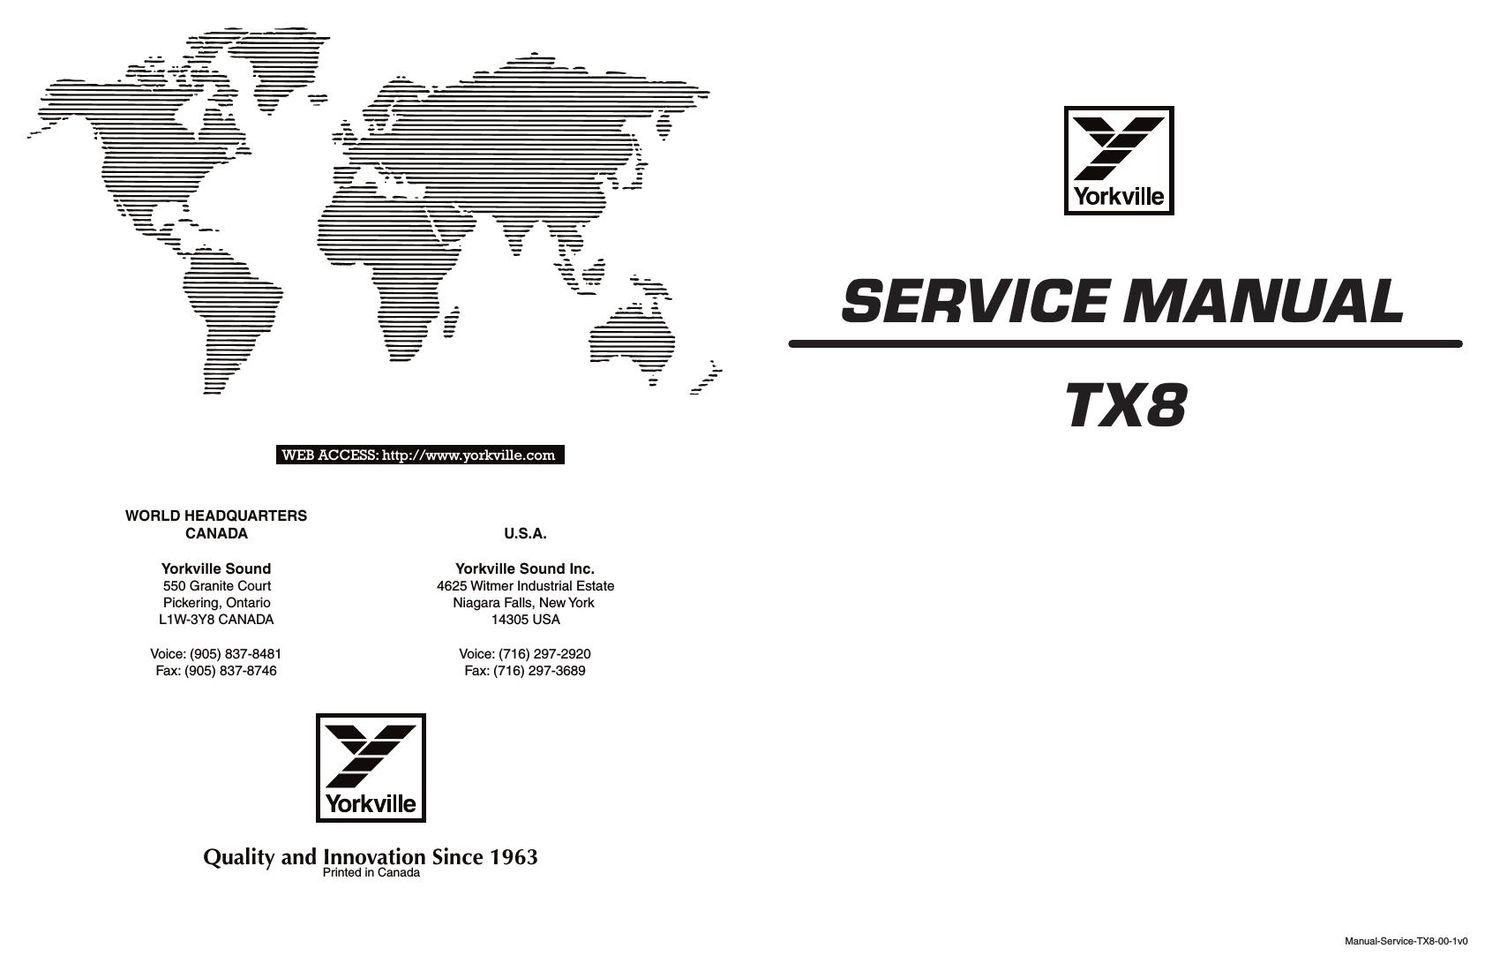 Yorkville TX8 Service Manual